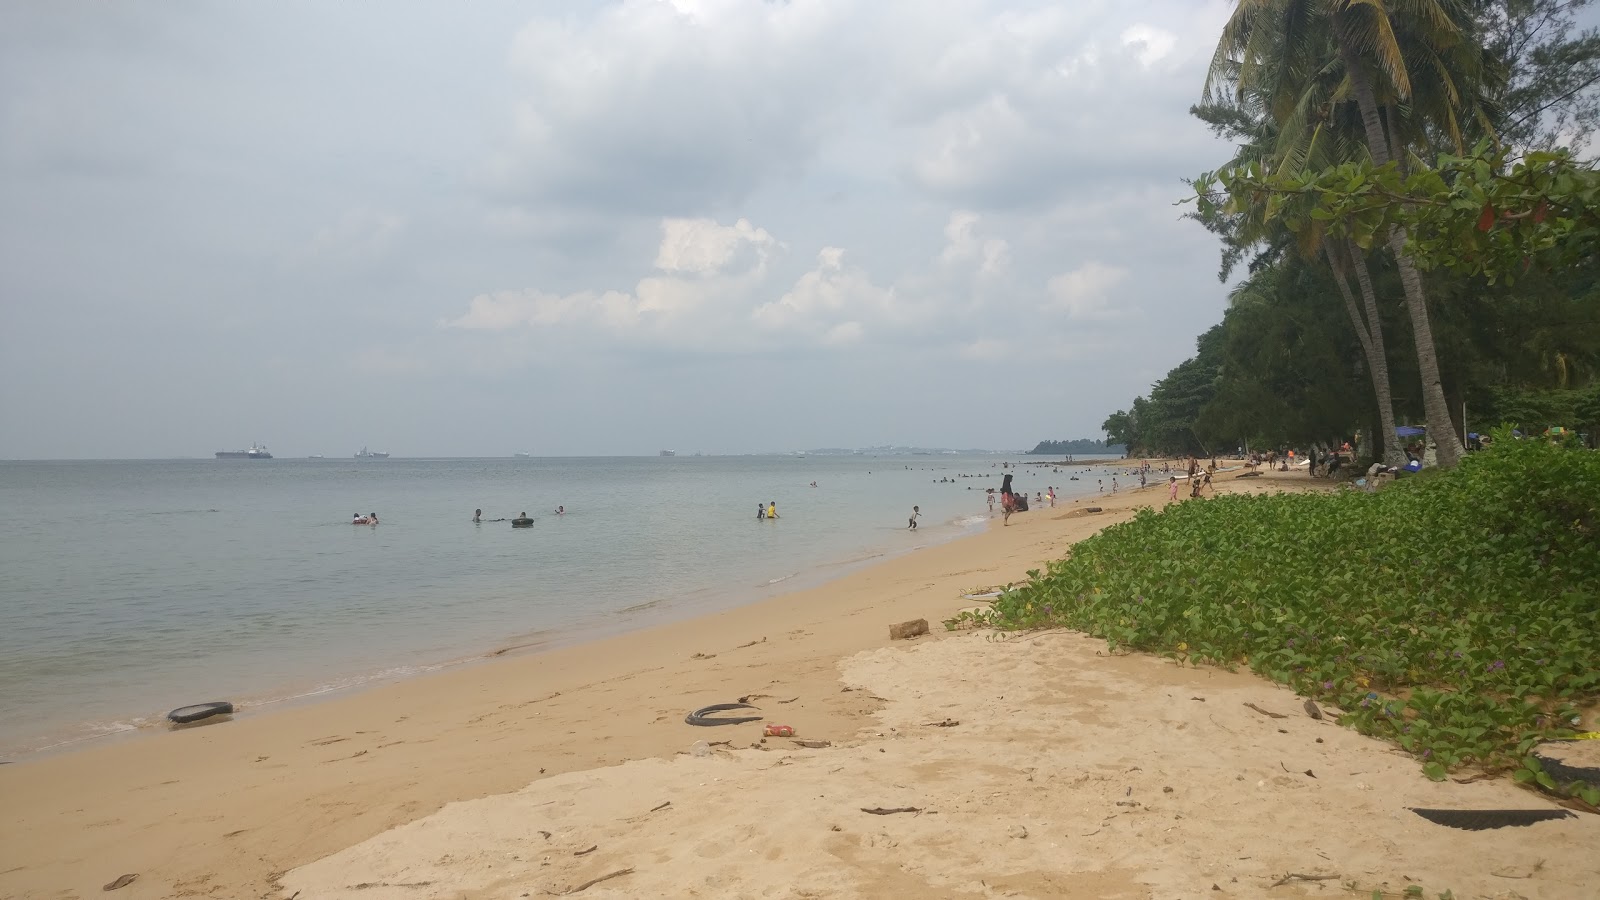 Pantai Tanjung Pinggir'in fotoğrafı ve yerleşim